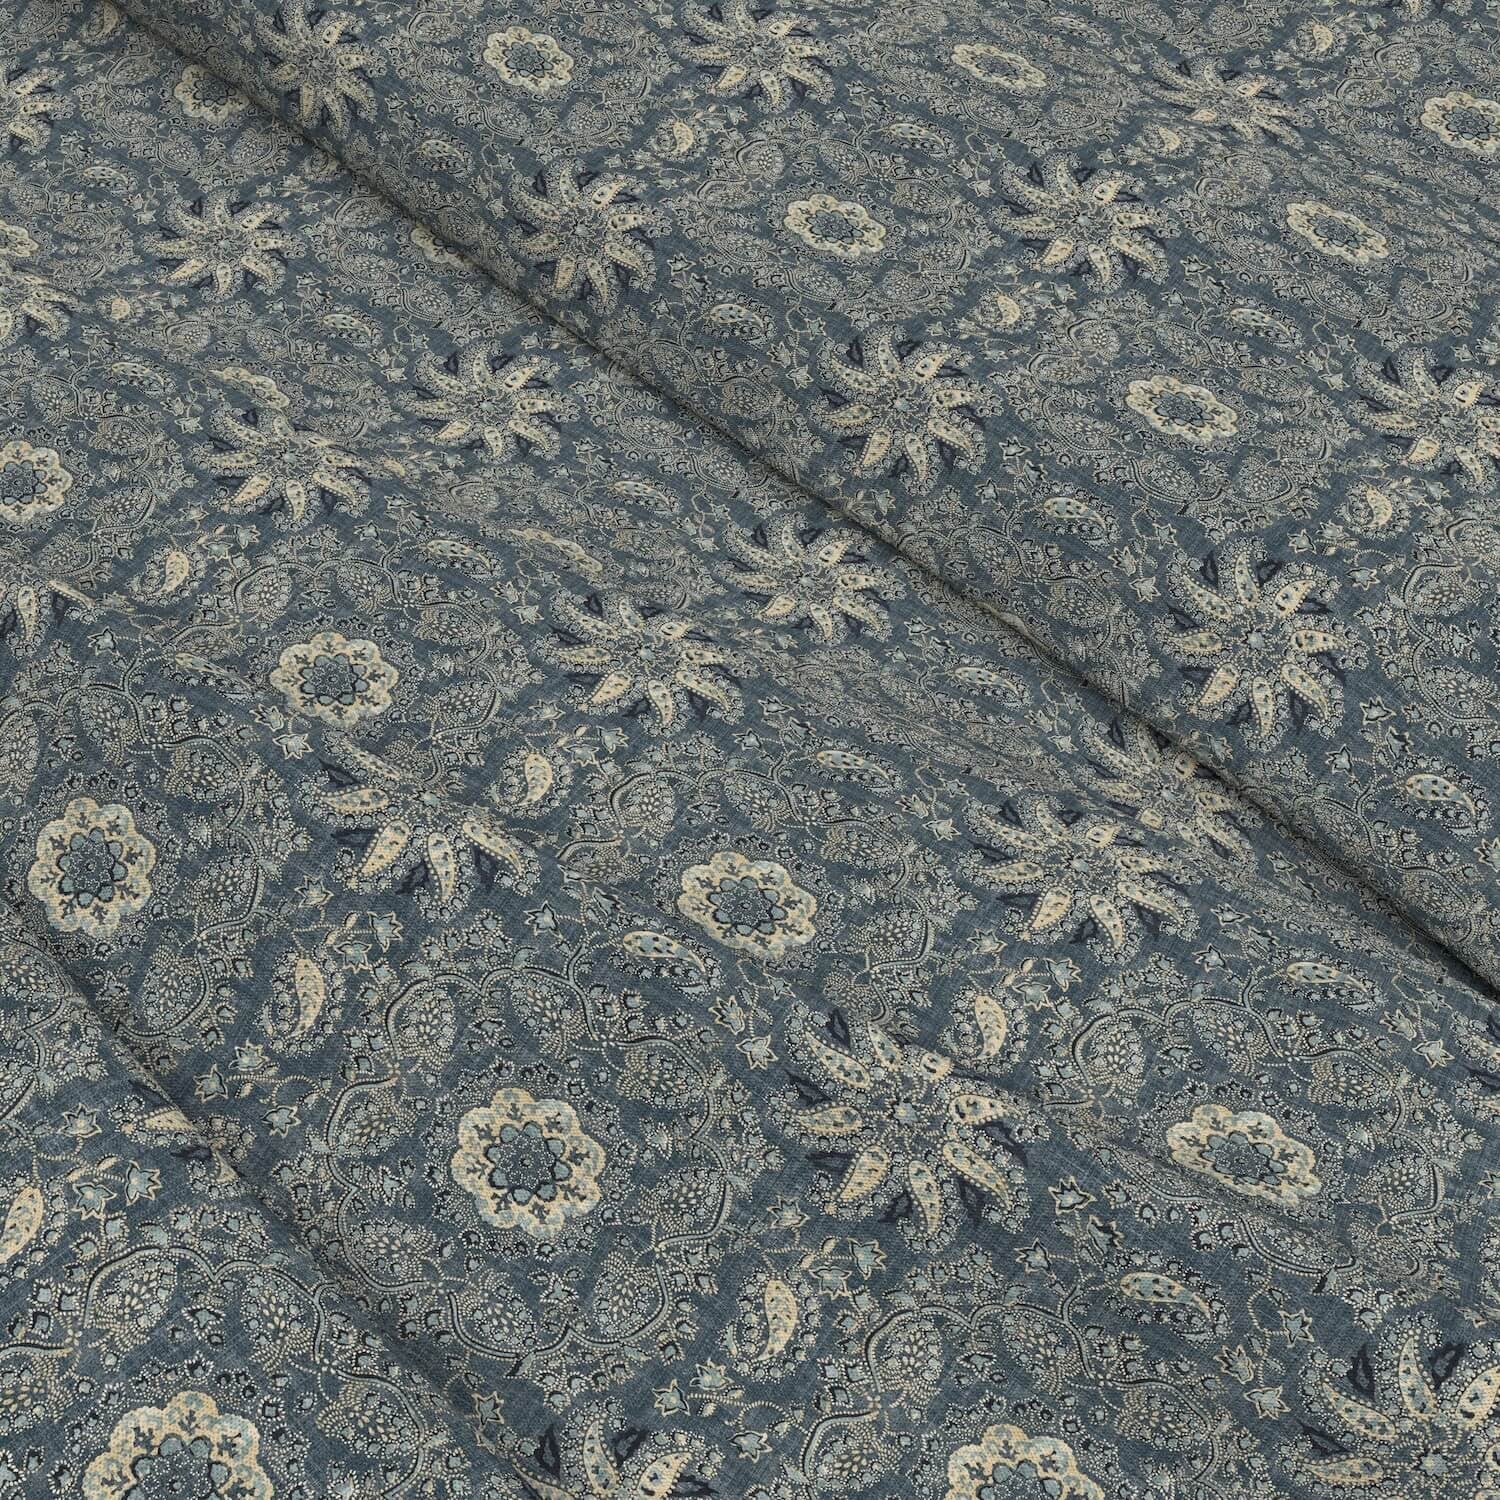 ADALINE Indigo Linen Mix Fabric - Warner House